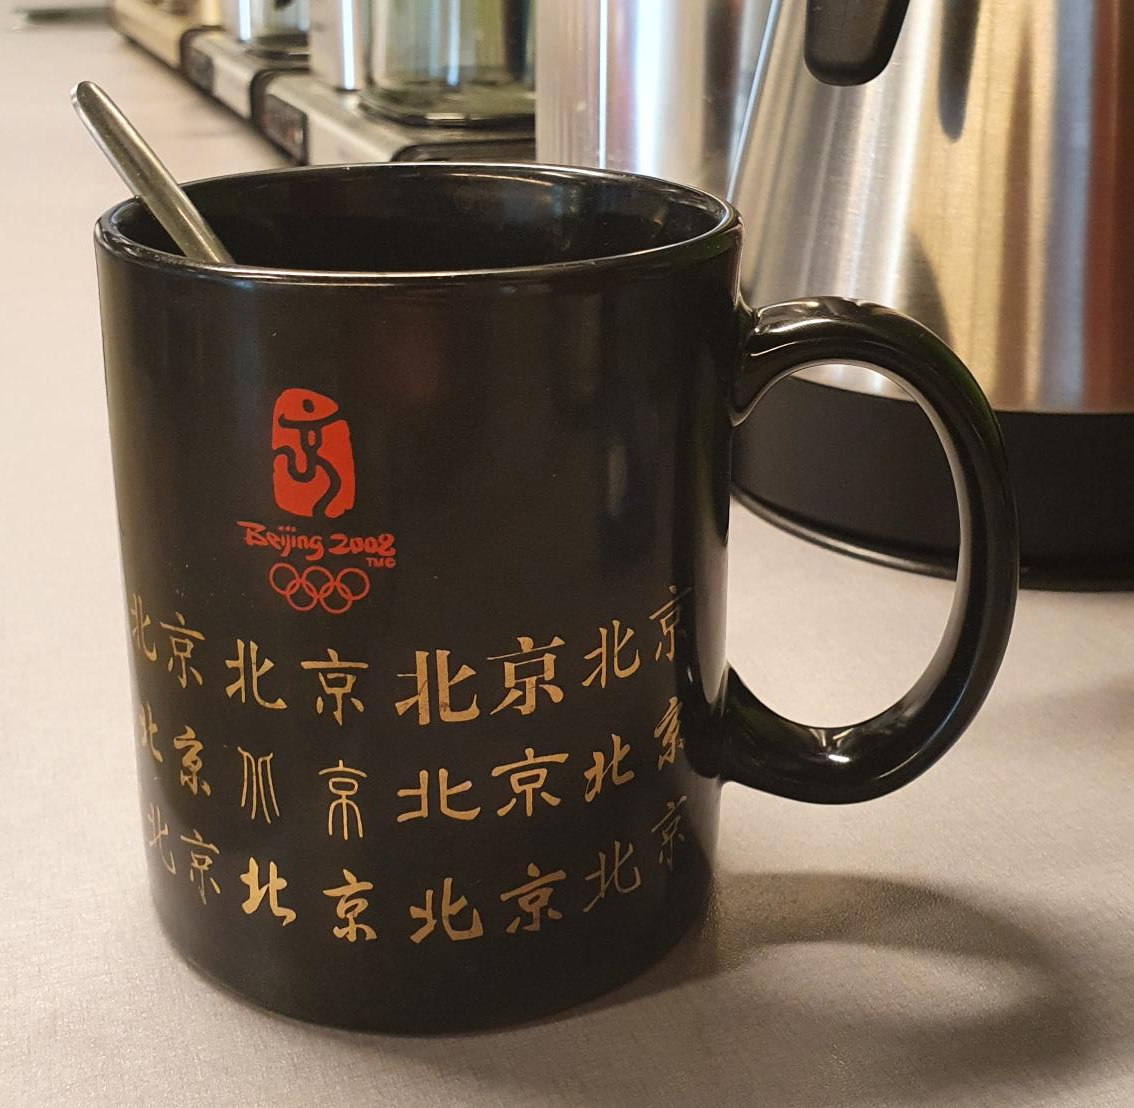 Major Public Event Protection - Krister's Beijing 2008 coffee mug suvenir